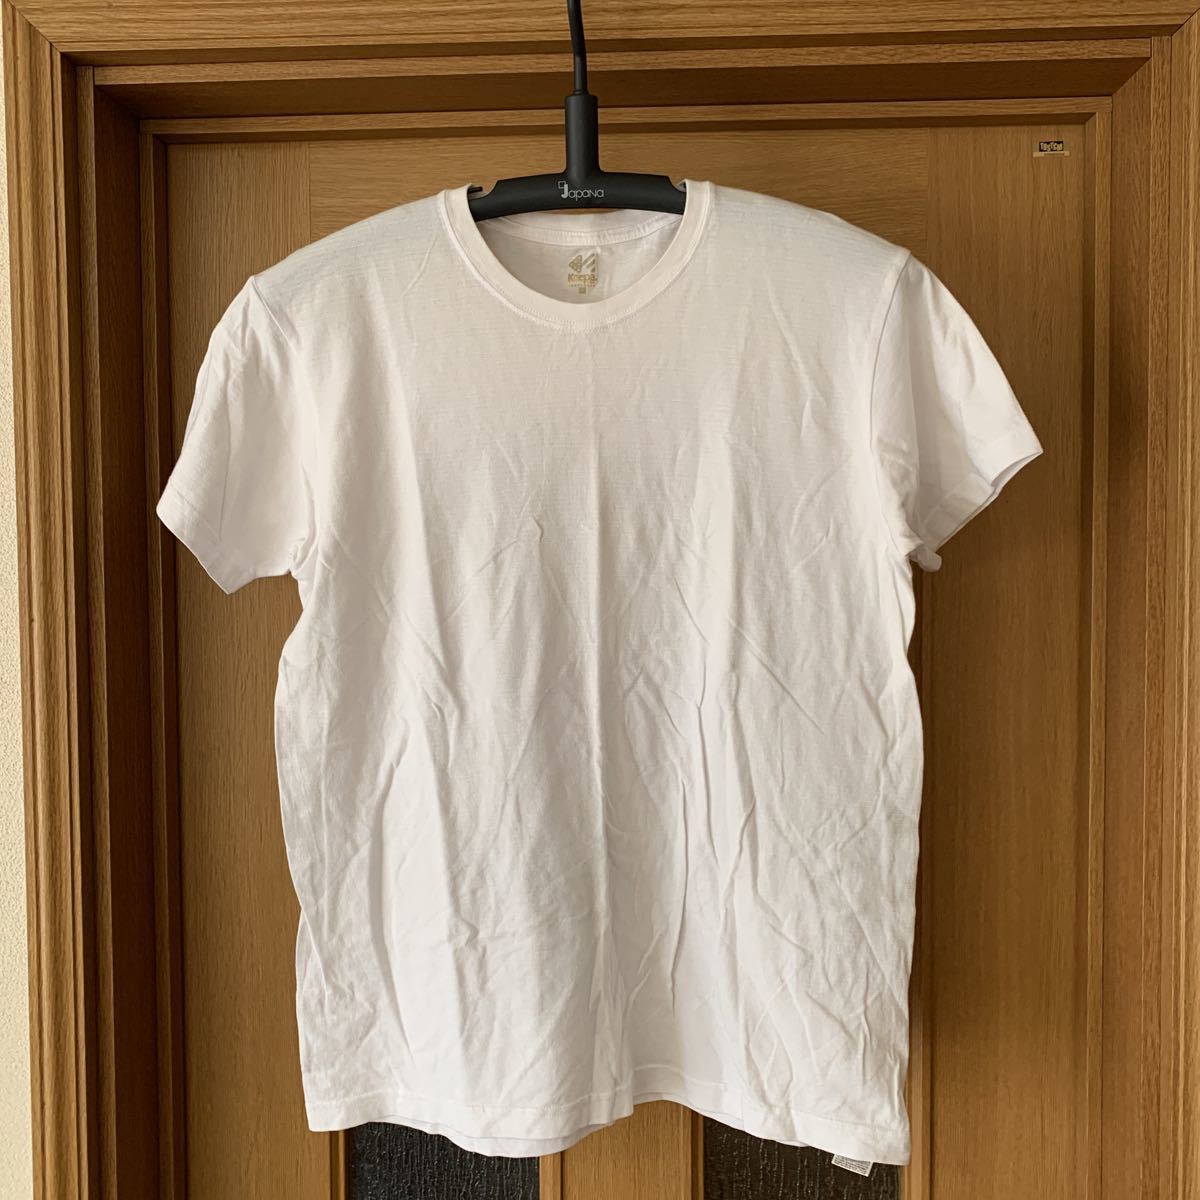 Kaepa ケイパ Tシャツ ホワイト メンズ MENS サイズ M チェスト88-96 綿85% ポリエステル15% 中古品 ワンシーズン使用 送料無料_画像7